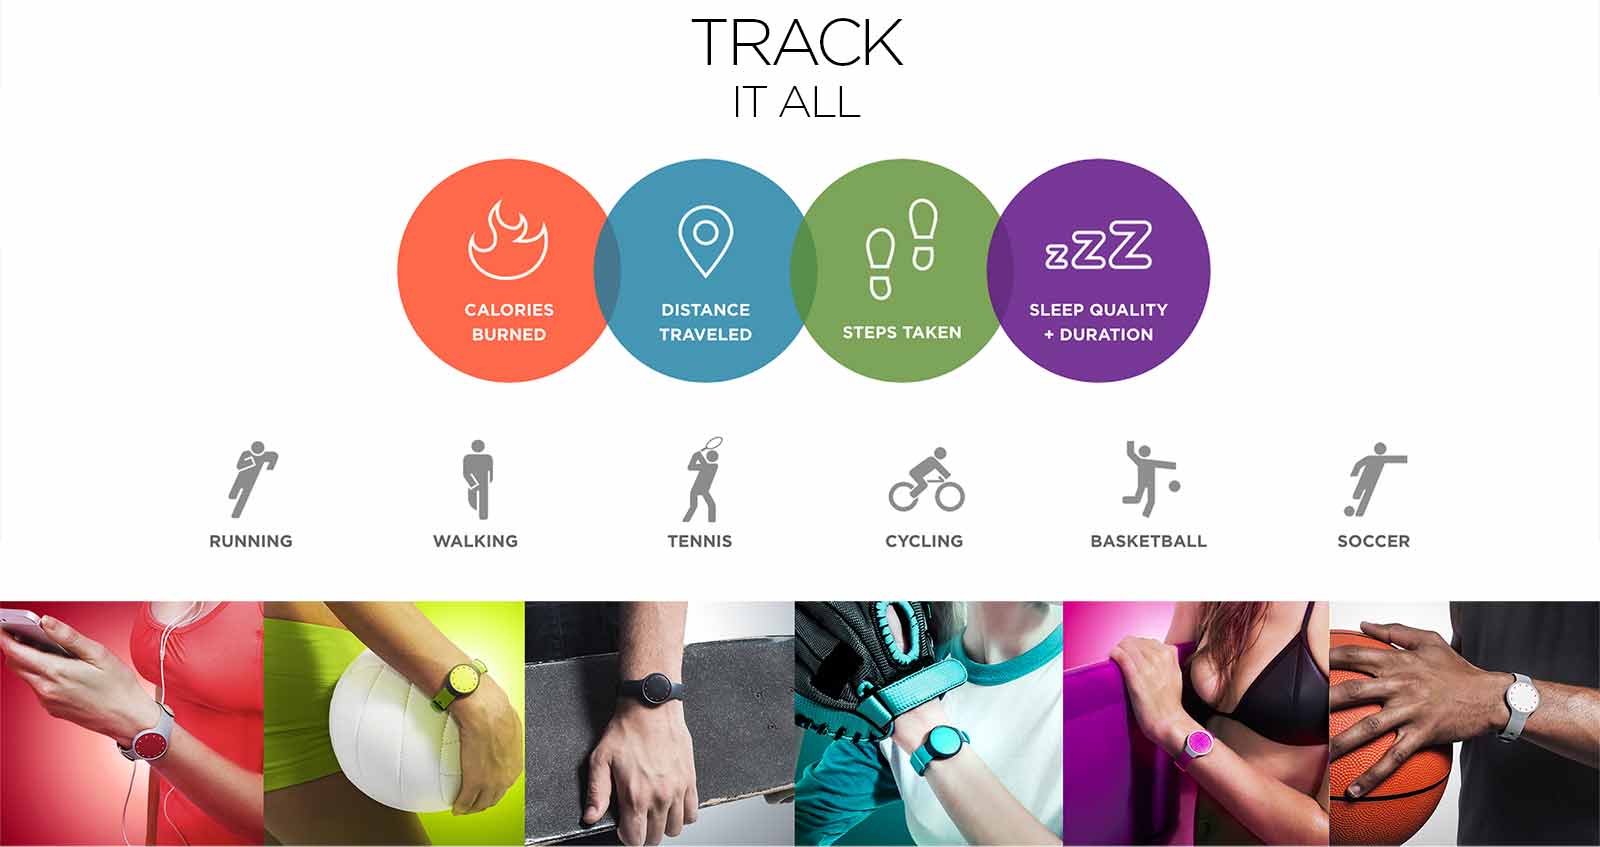 snapdeal-misfit-fitness-sleep-trackers-india-9-2015-flash